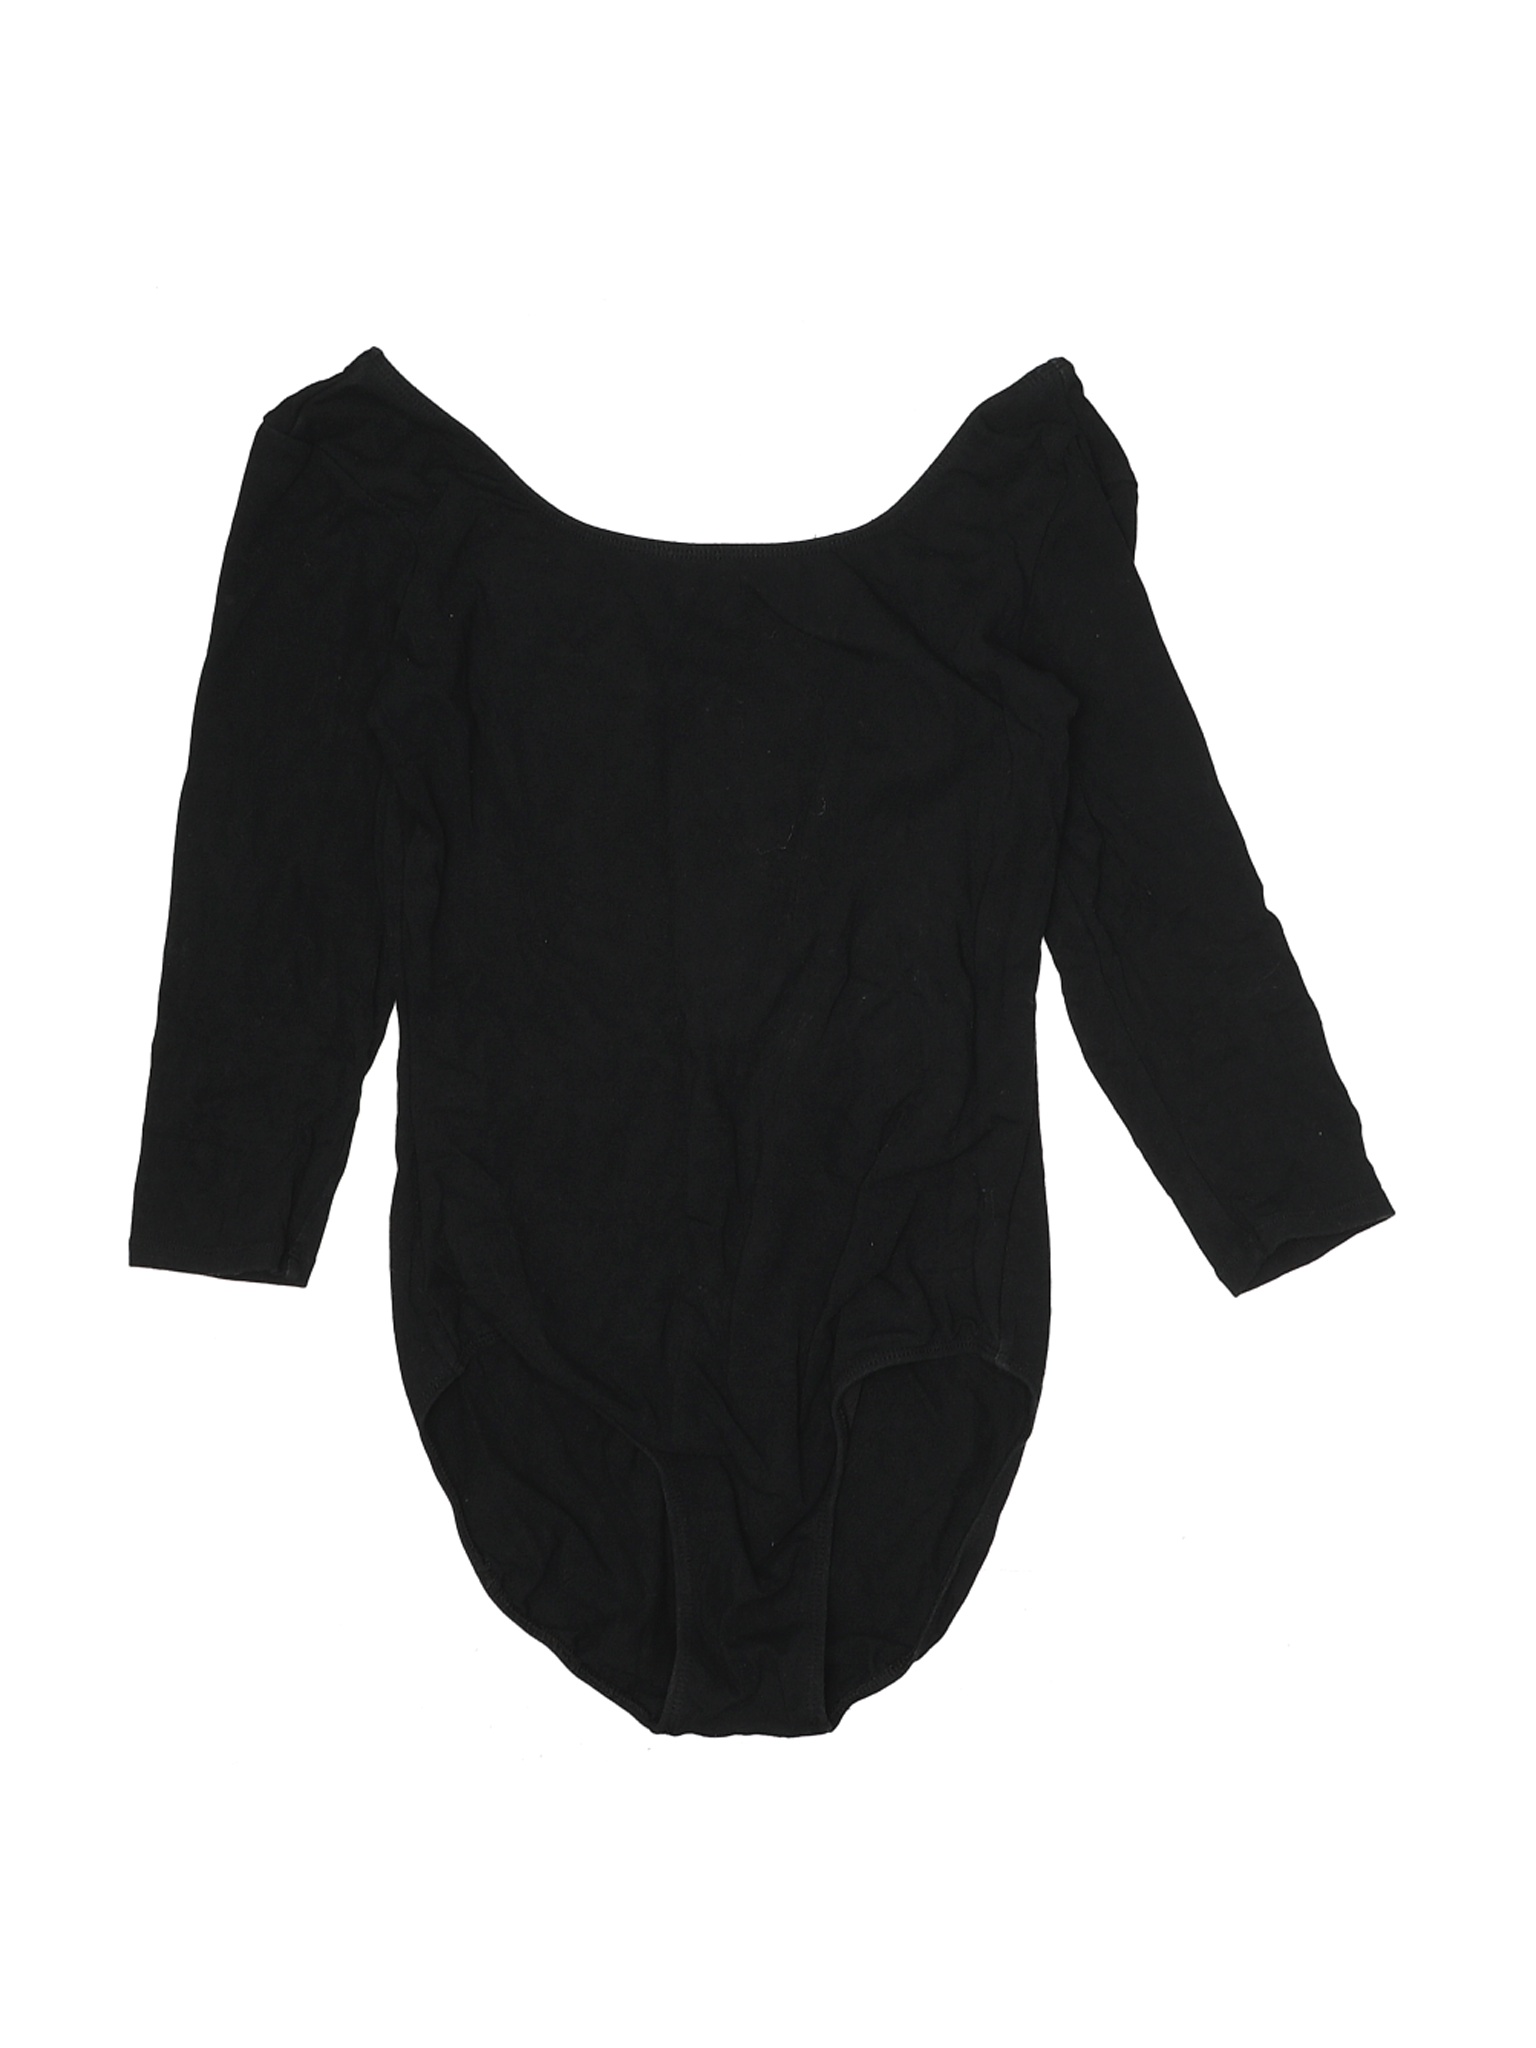 Danskin Women Black Bodysuit S | eBay